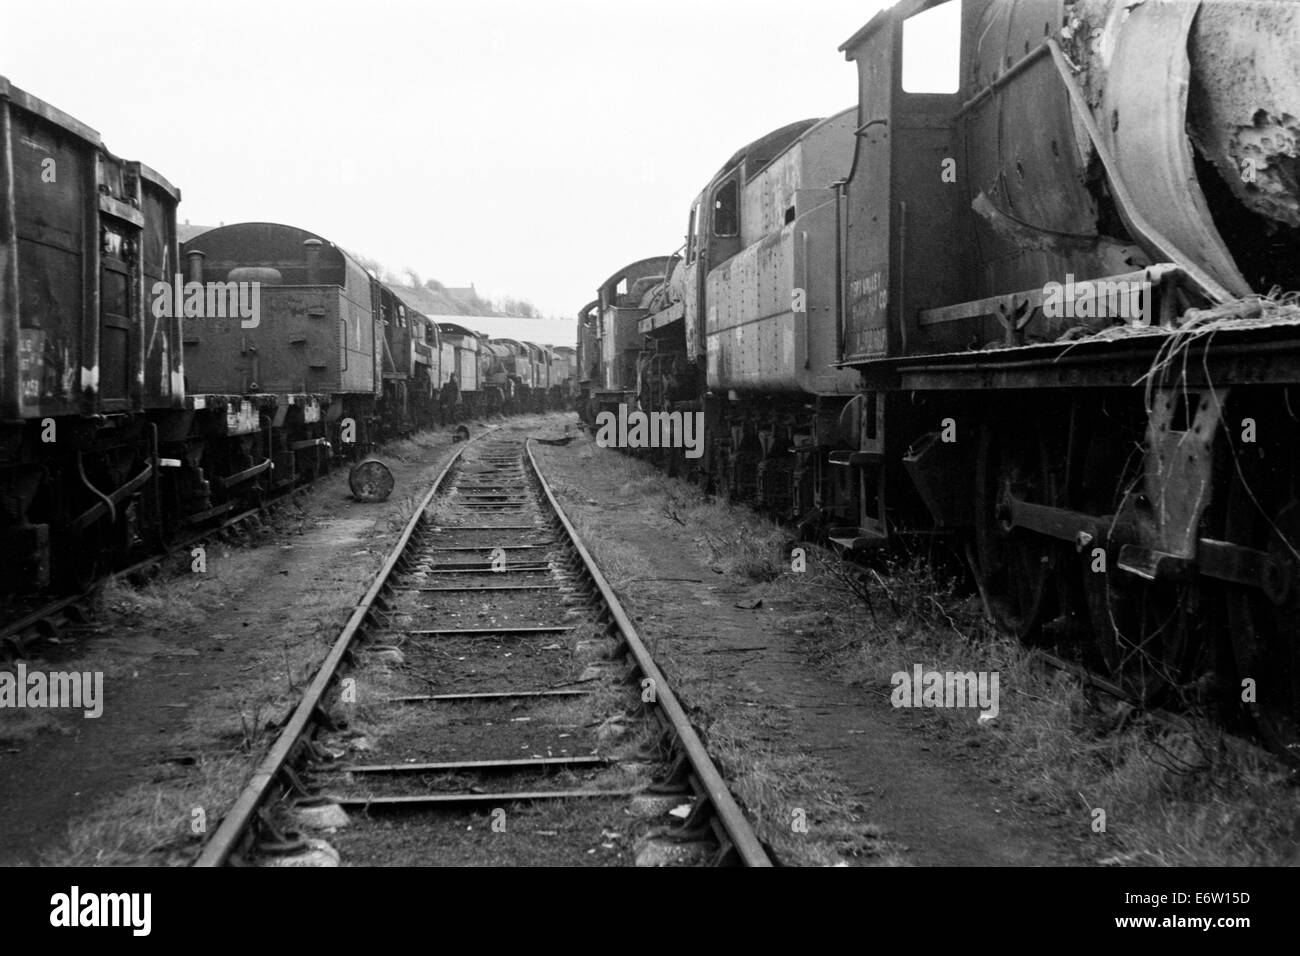 Demolito ex British Railways locomotive a vapore a woodhams scrapyard barry island Galles nel 1974 Foto Stock